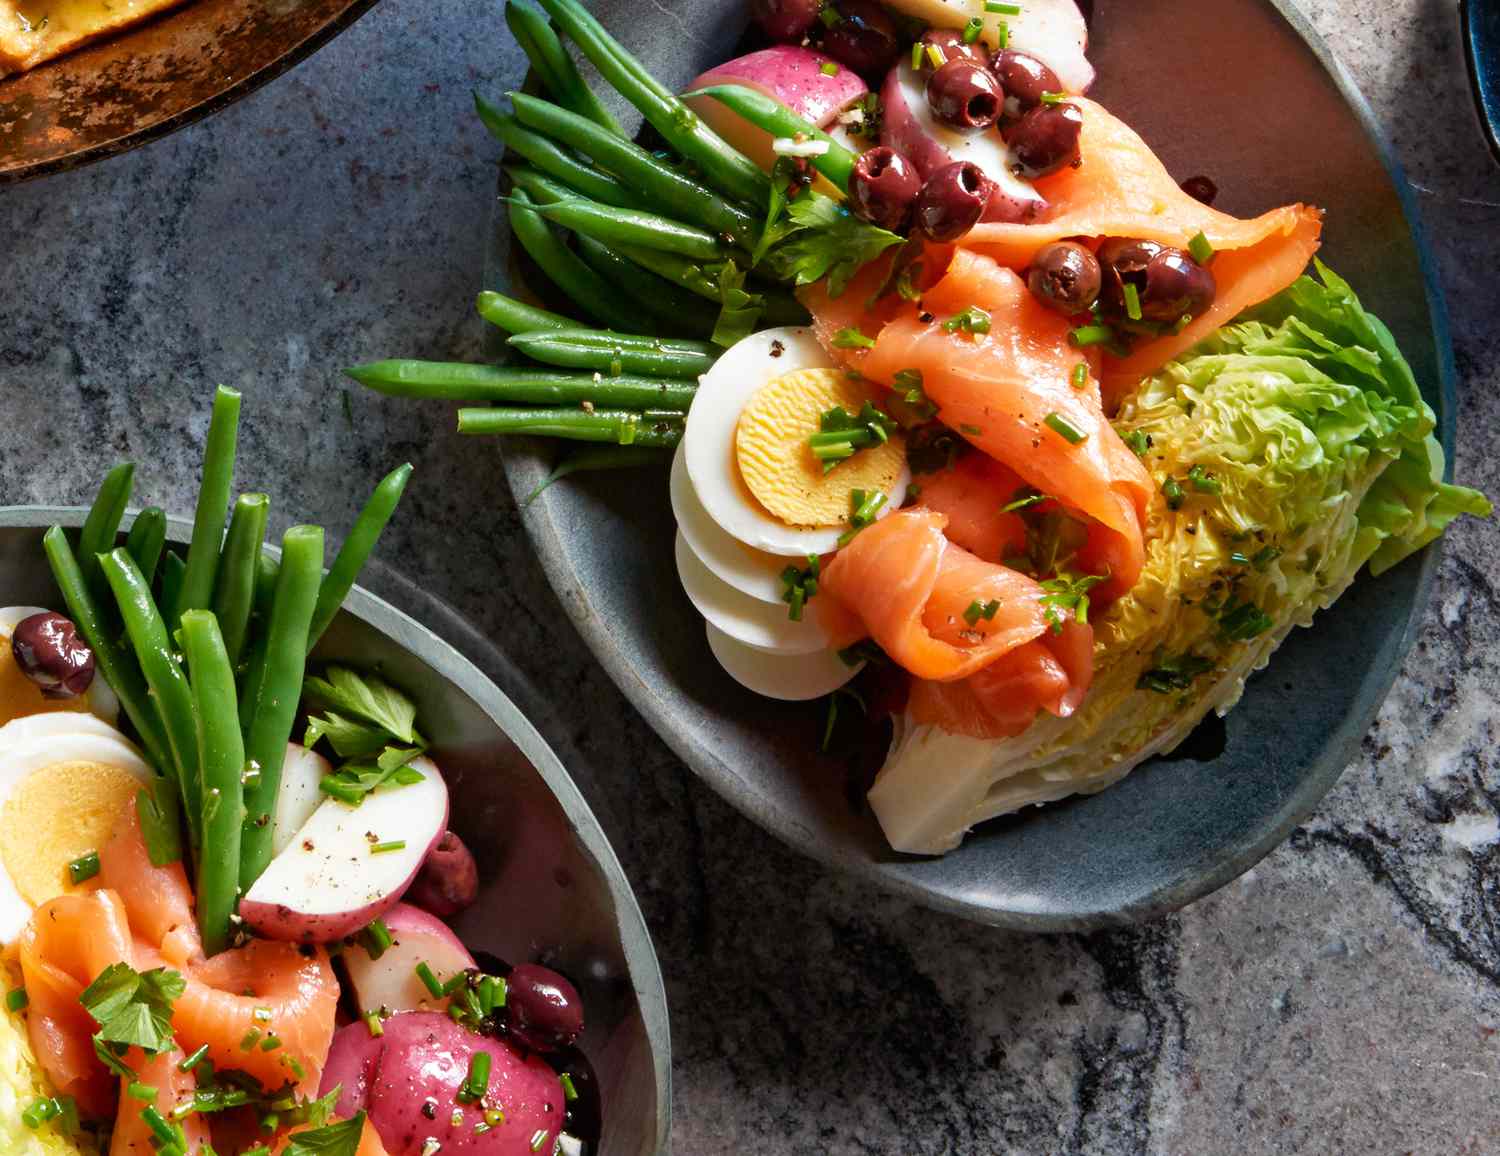 Nicoise-Style Lox Salad